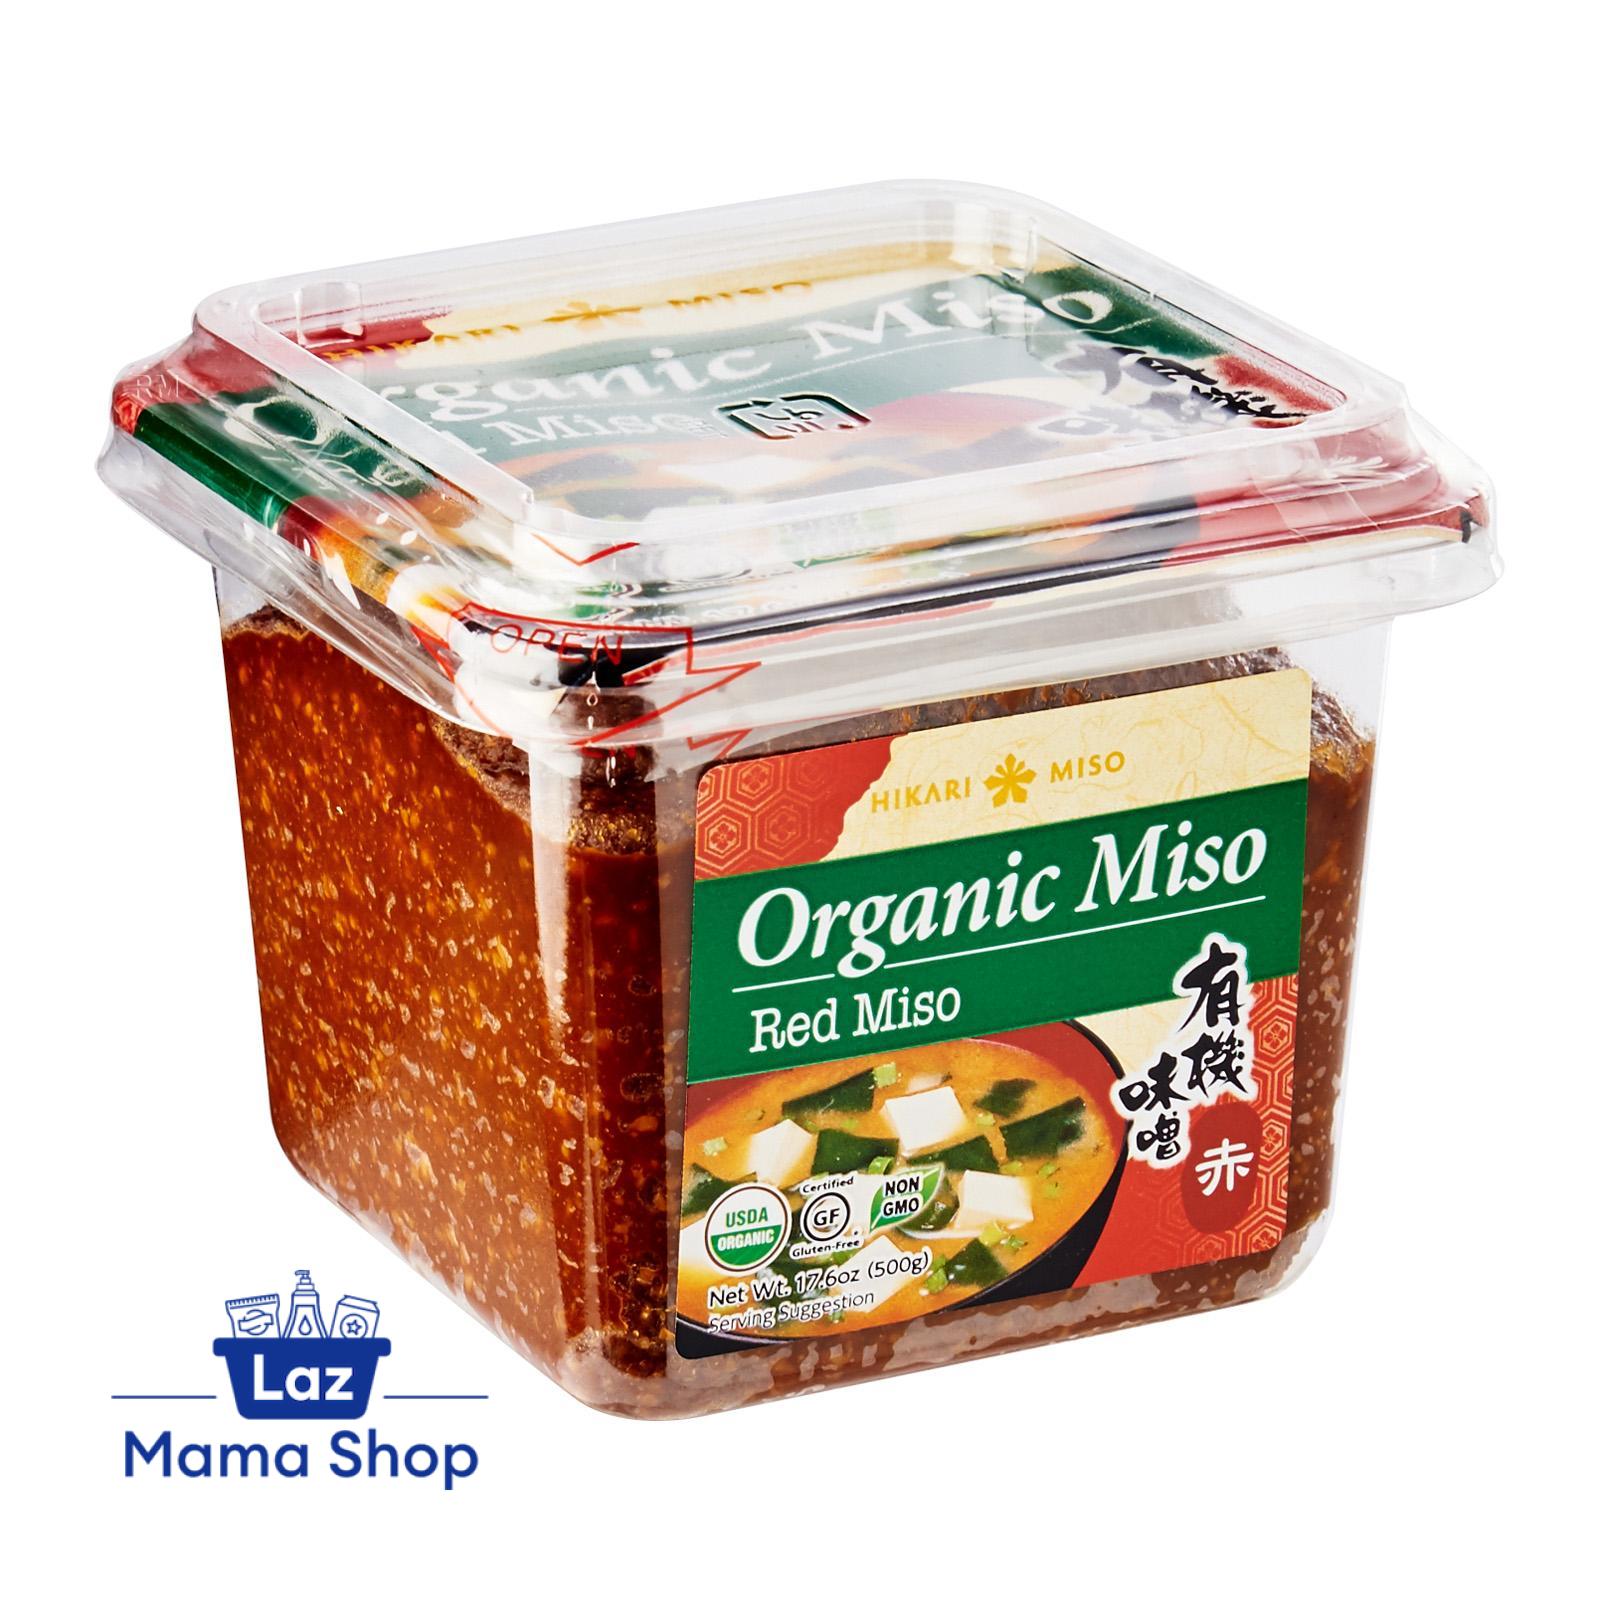 Hikari Miso Organic Miso Paste, White - 500 g